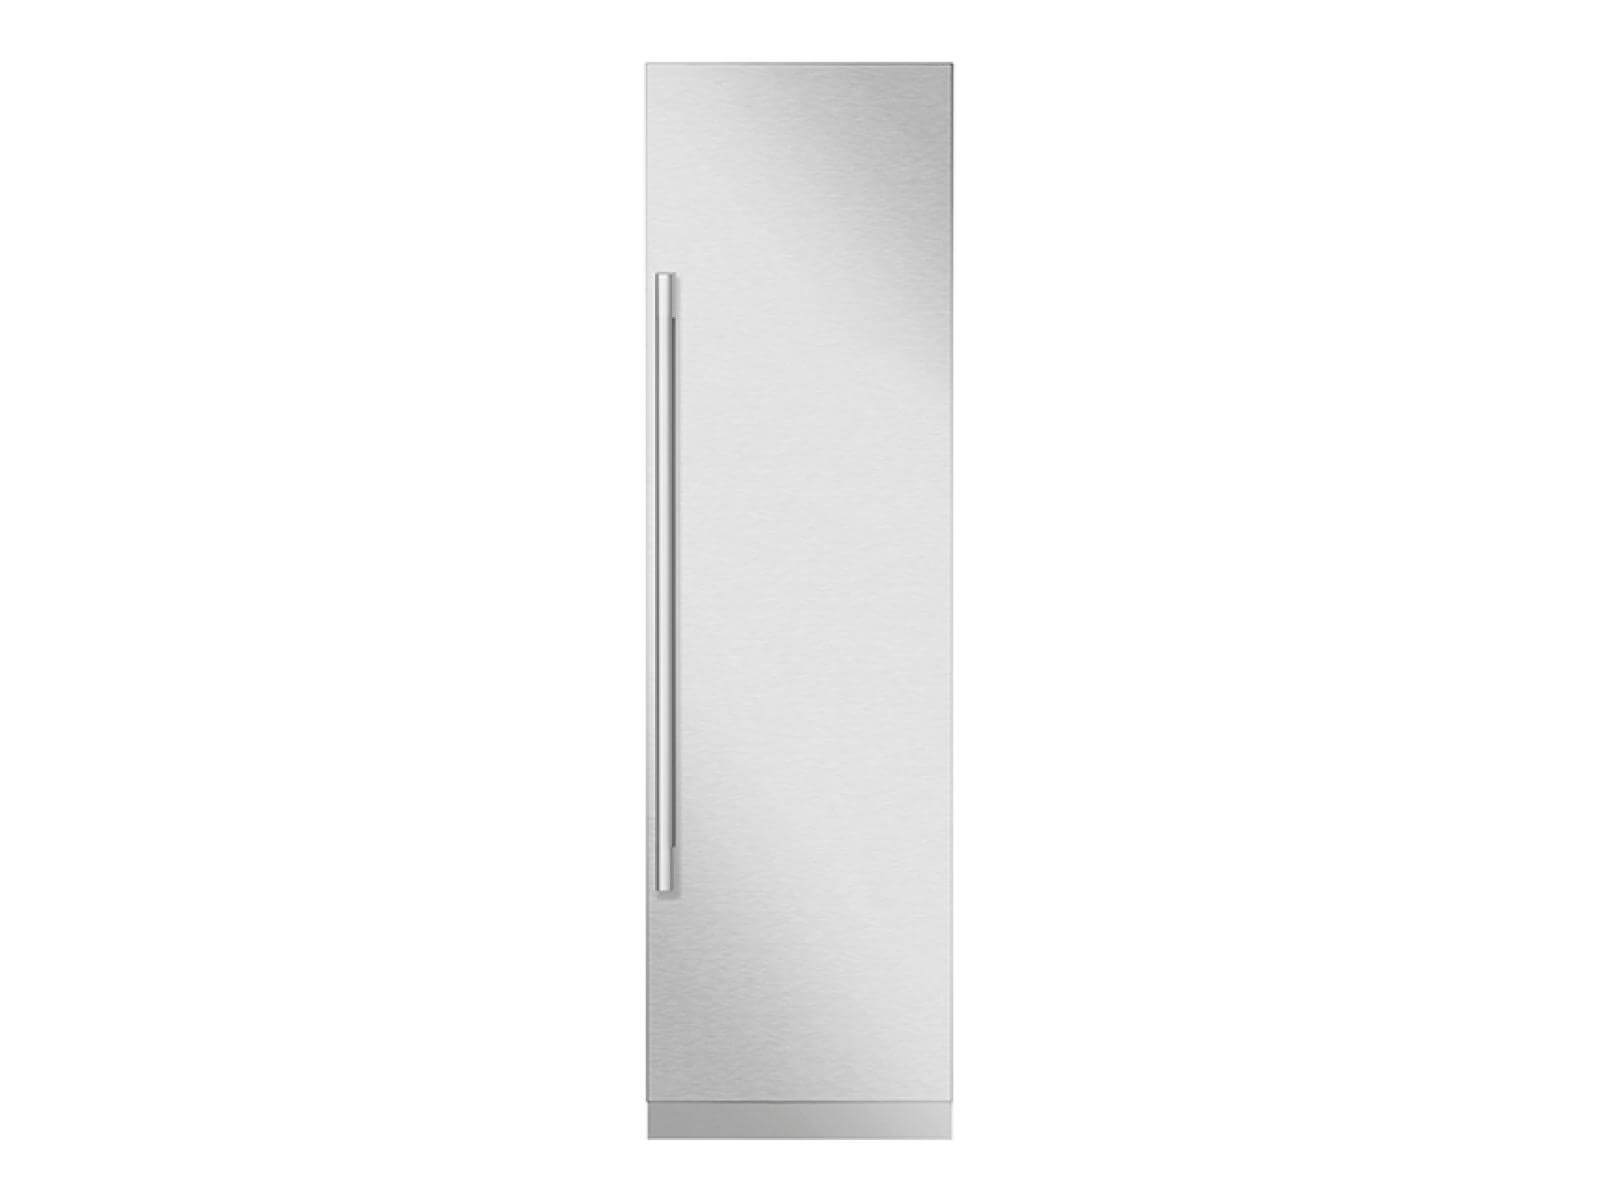 24-inch Integrated Column Refrigerator